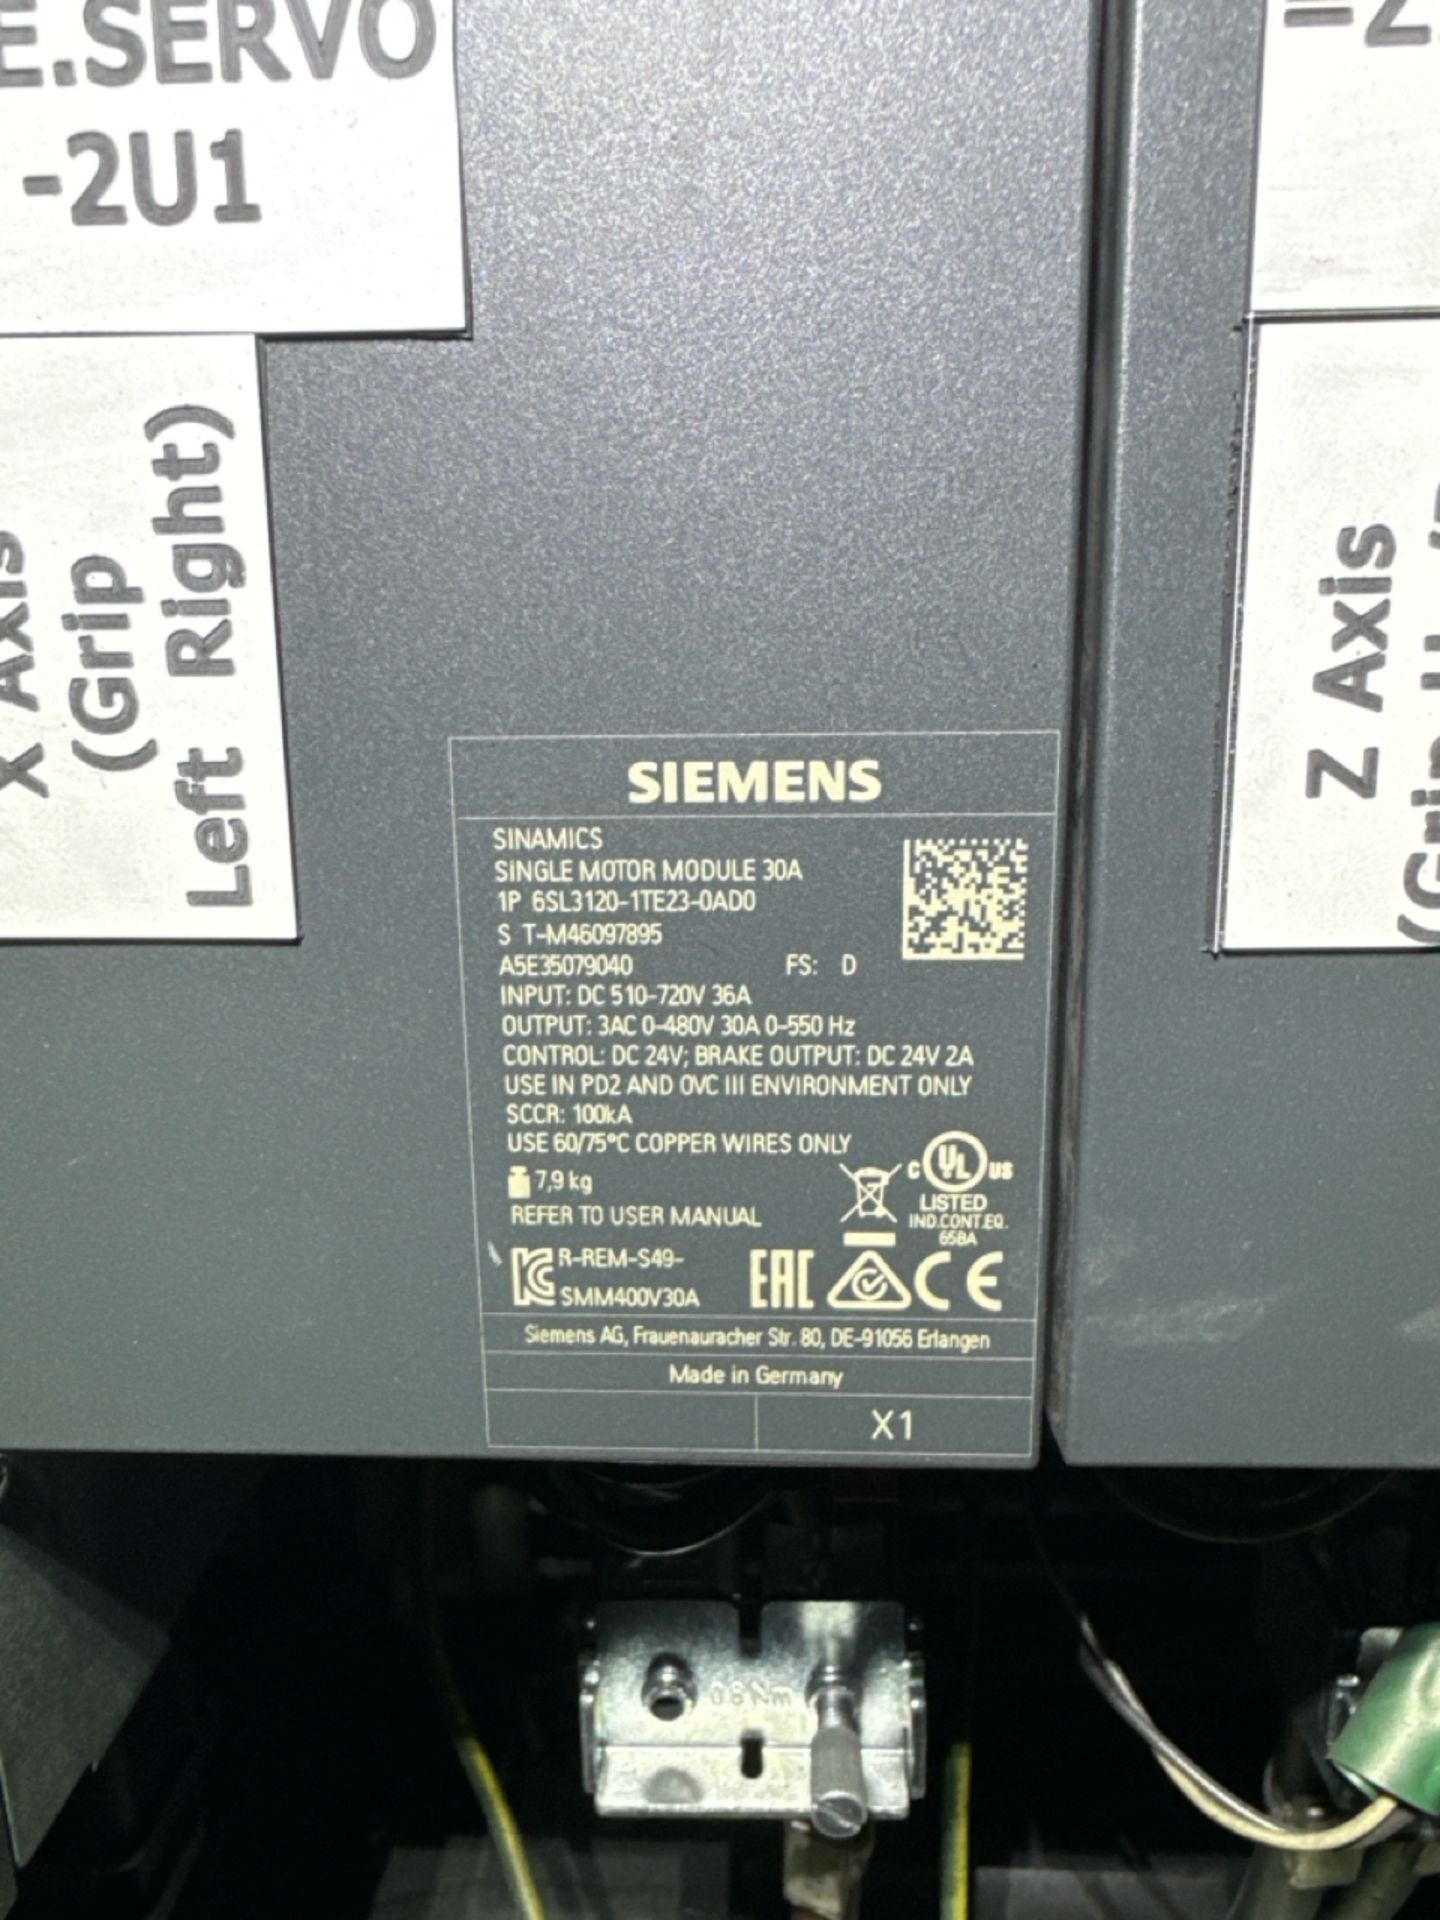 Siemens Sinamics Single Motor Module 30A - Image 2 of 2